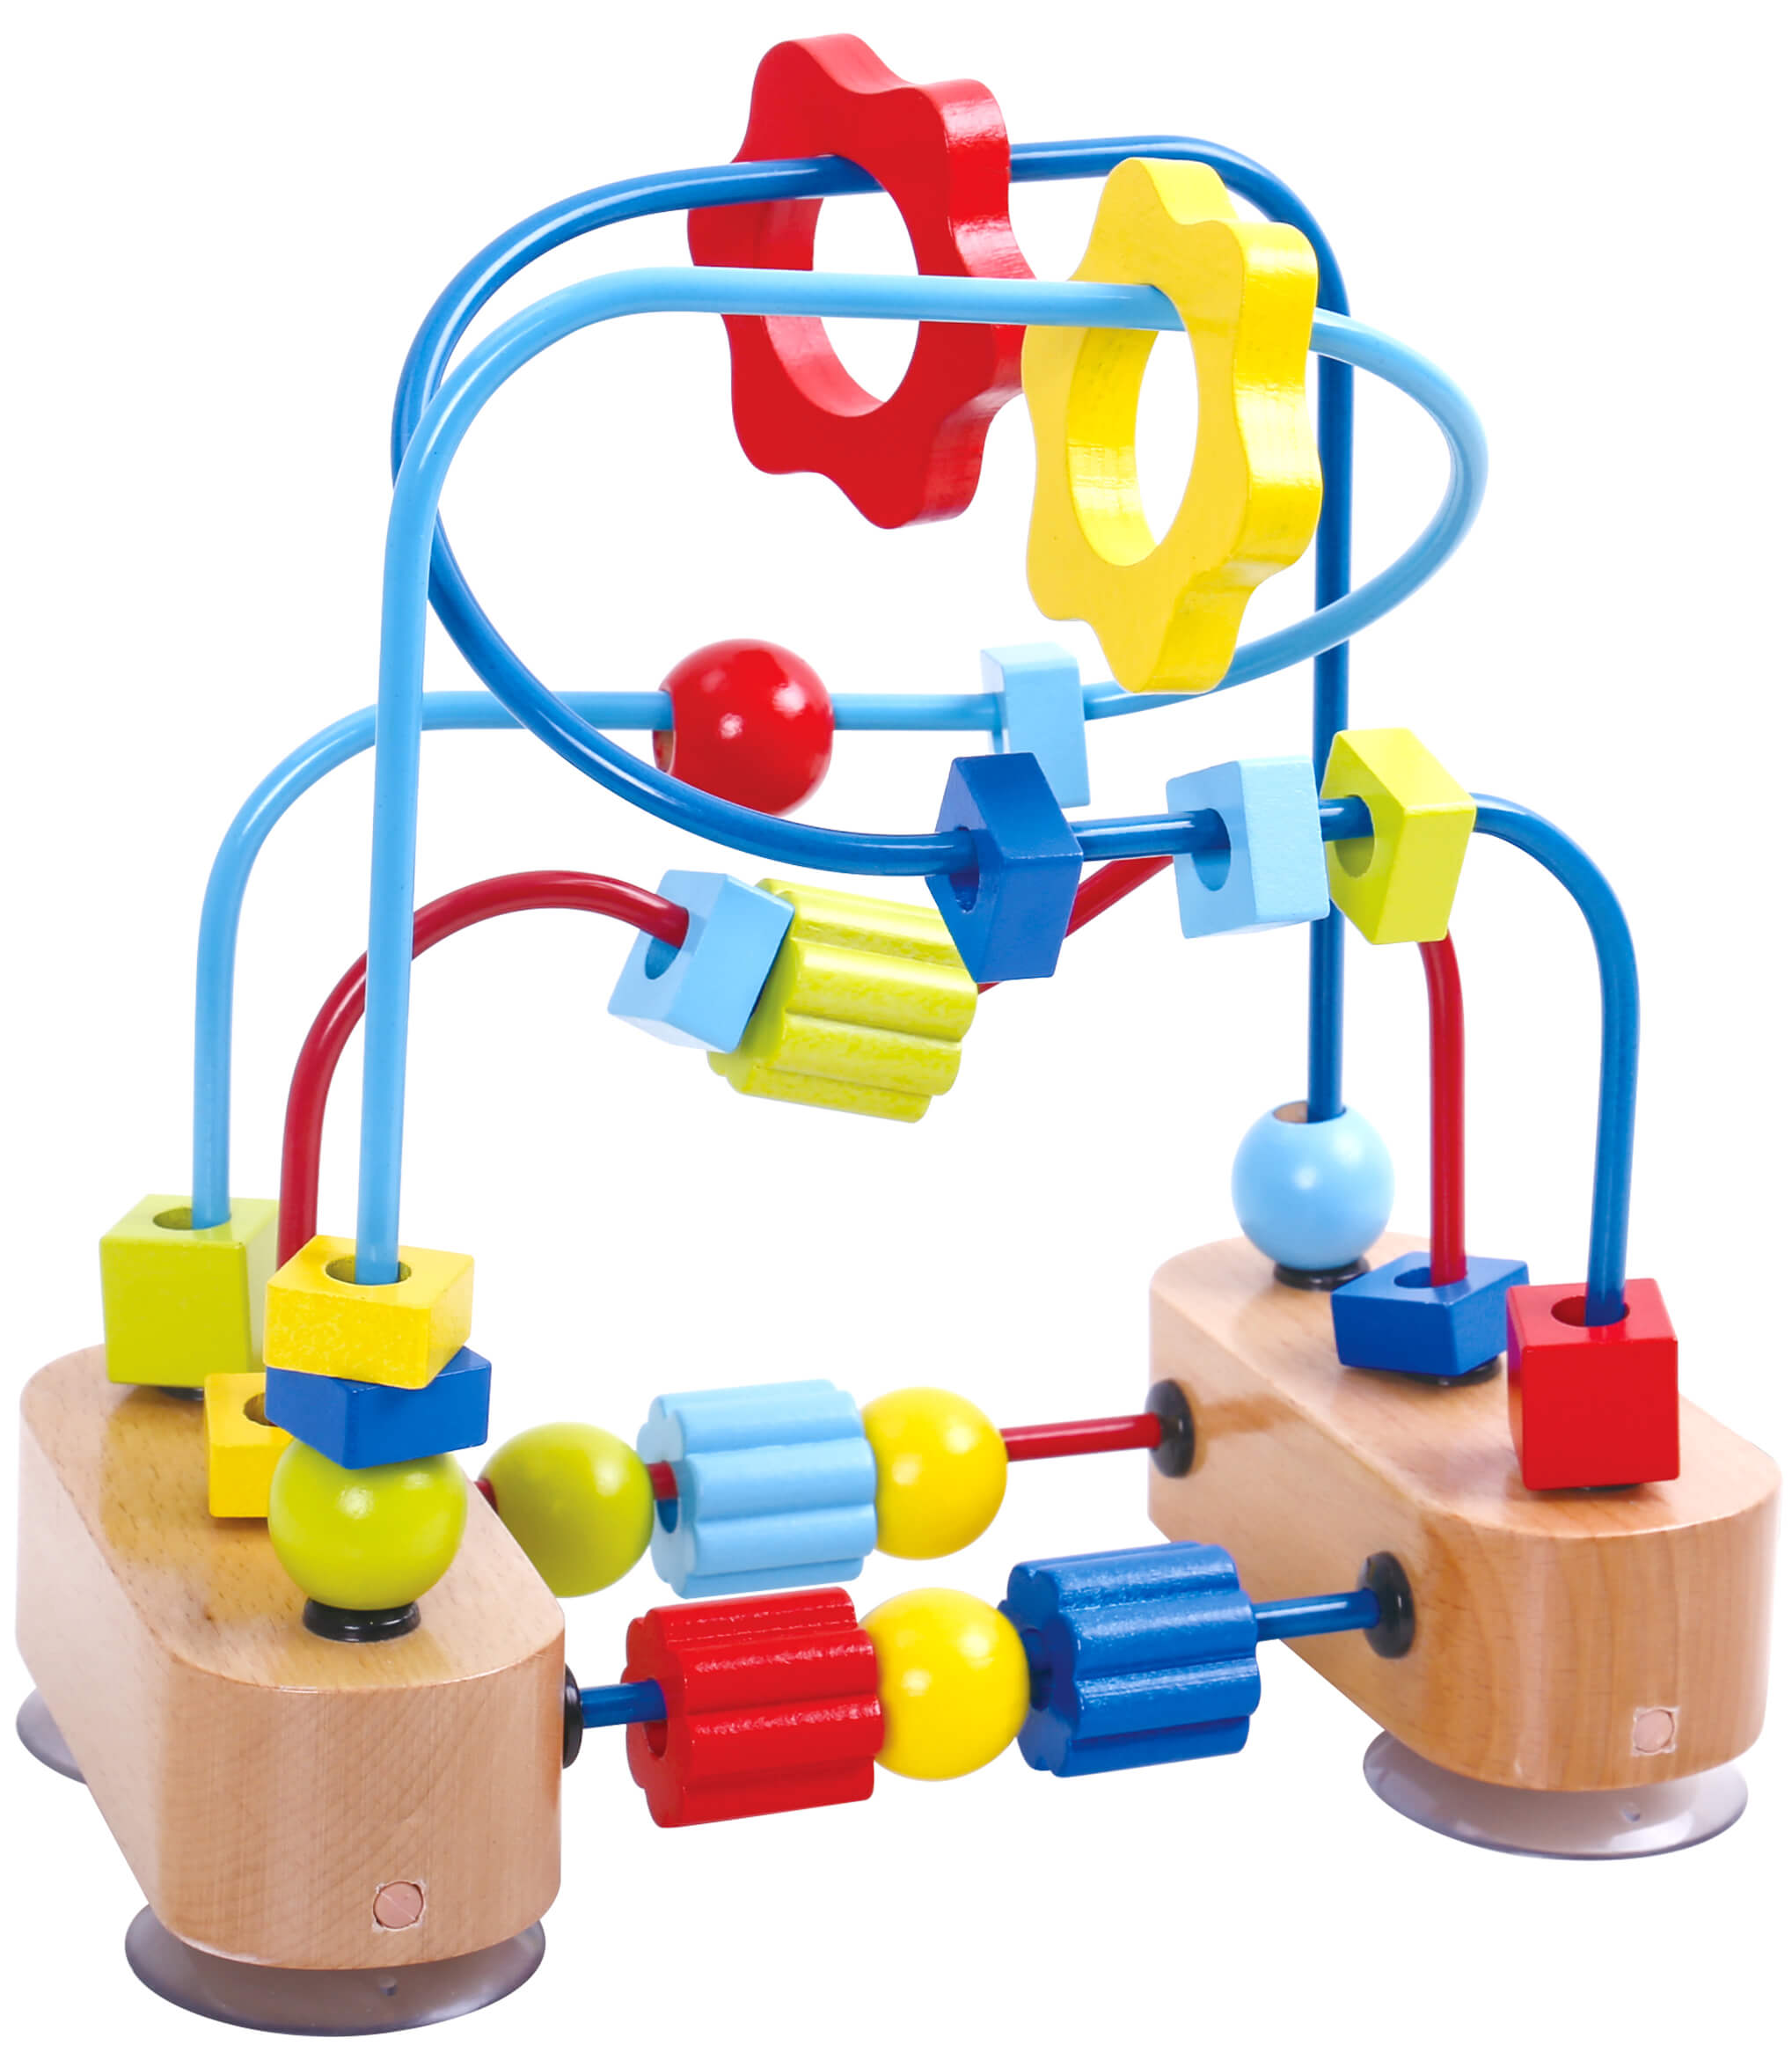 Tooky Toy Aktivitetsleksak Kulbana med geometriska former barn